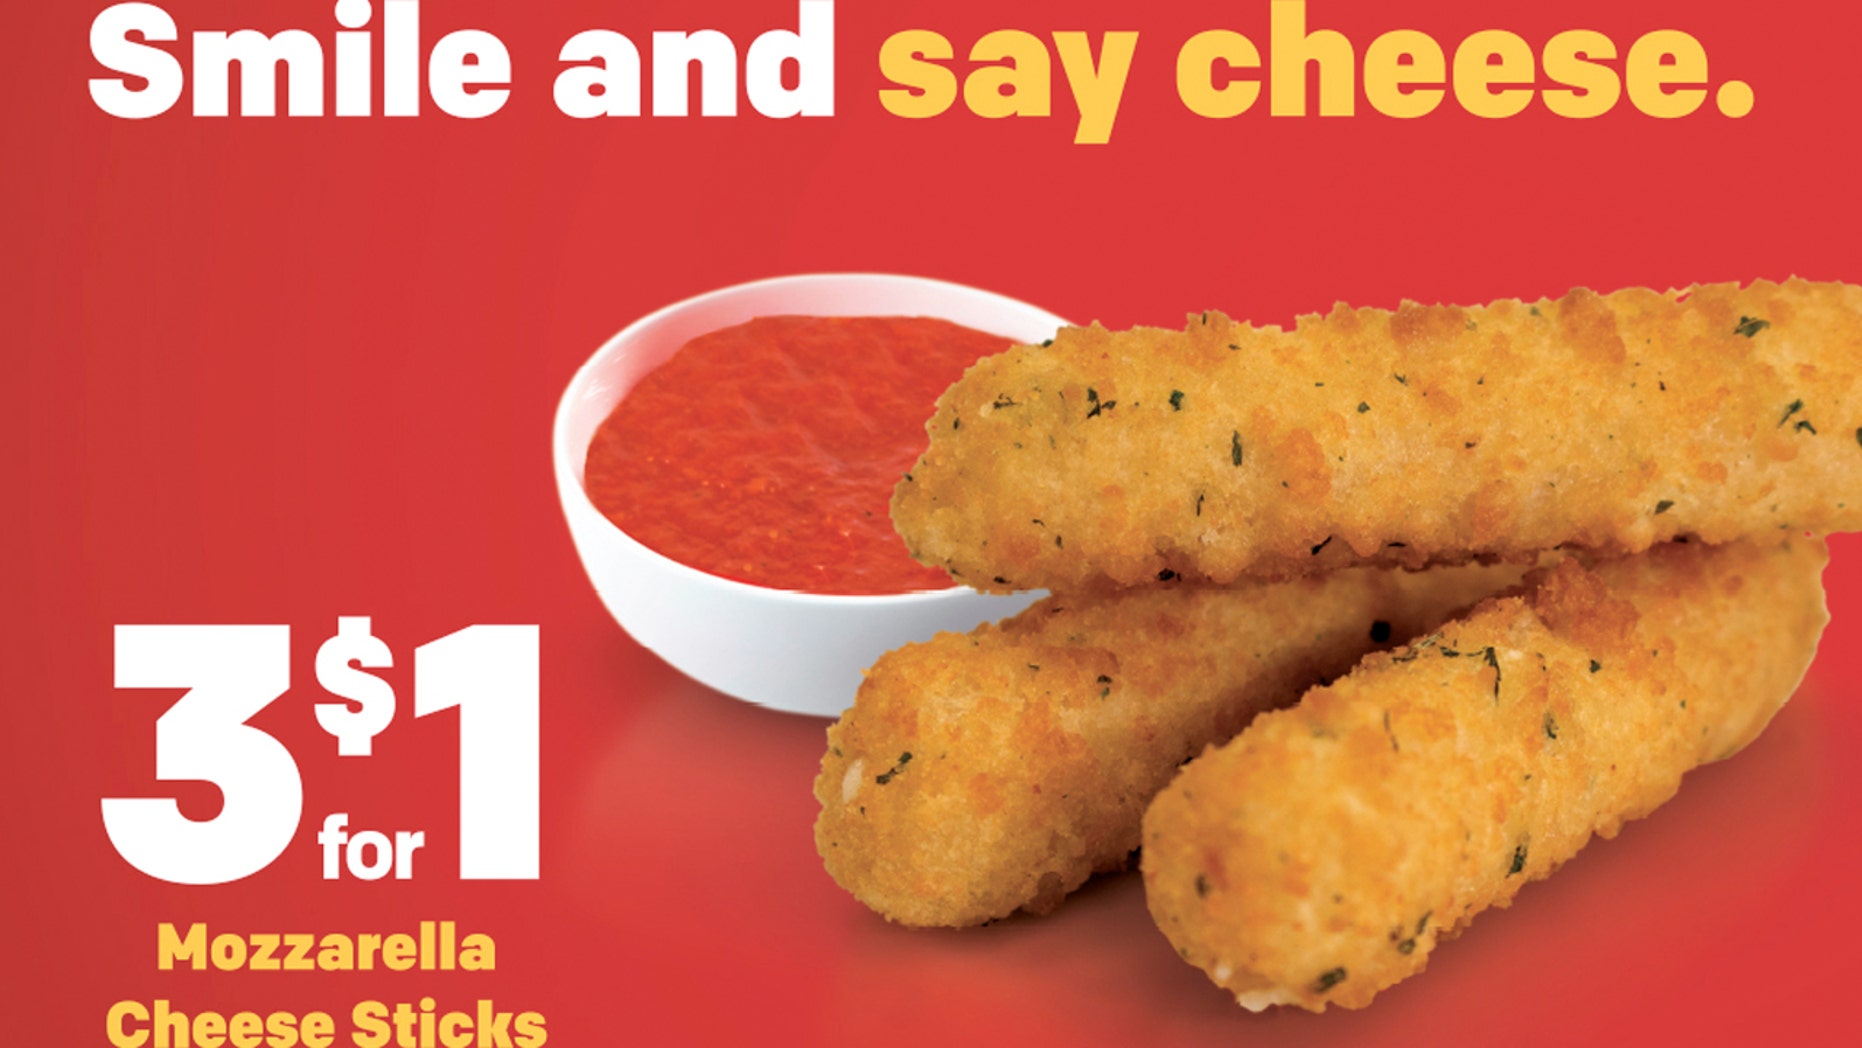 McDonald’s blasted for serving cheeseless mozzarella sticks Fox News